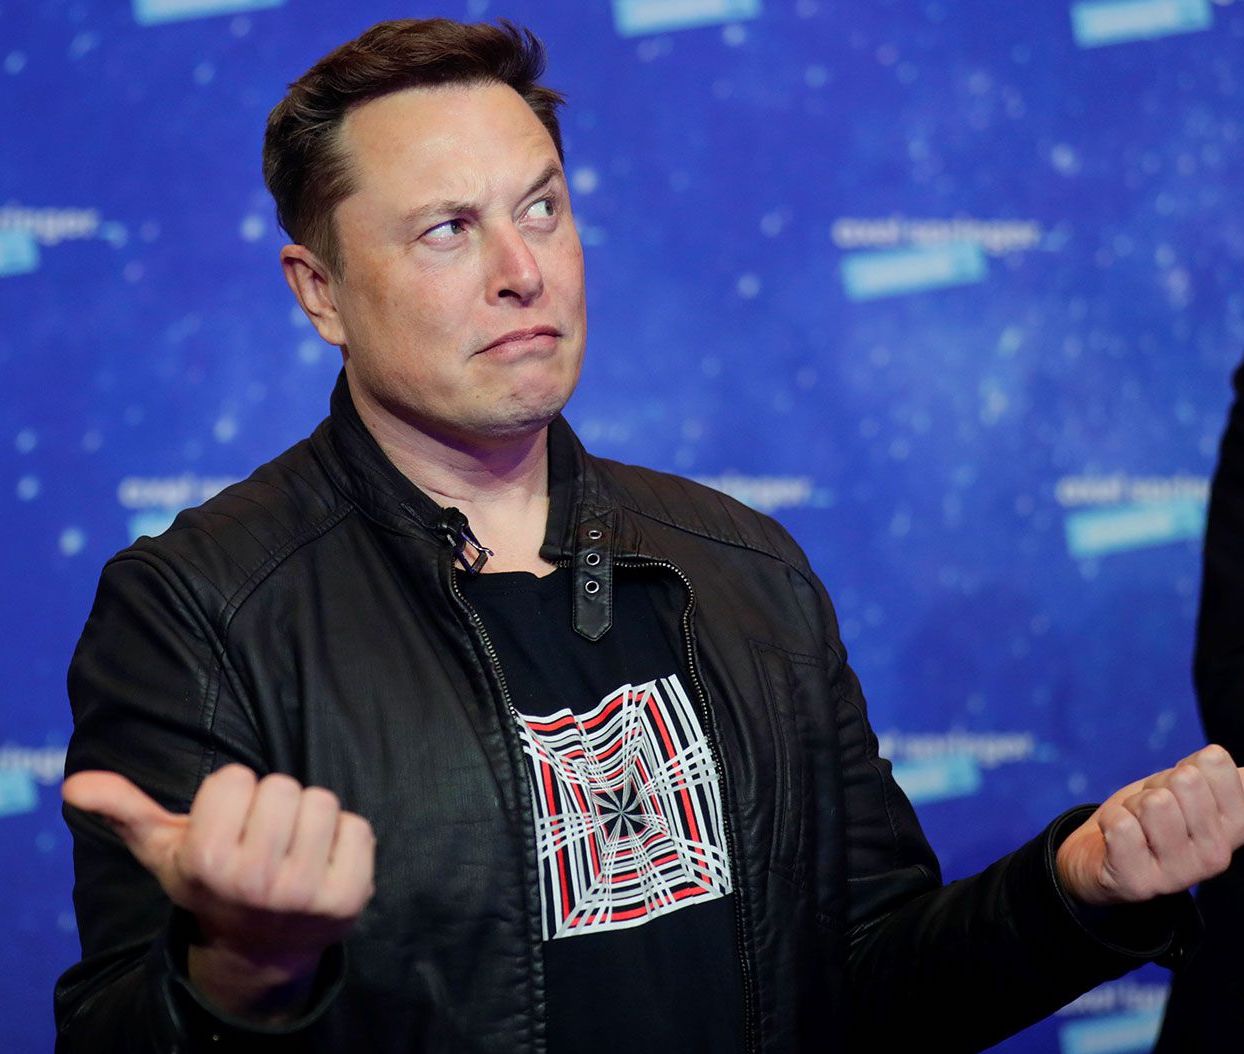 Has anyone said Elon Musk yet? For sure, that guy. -CharmCity6022